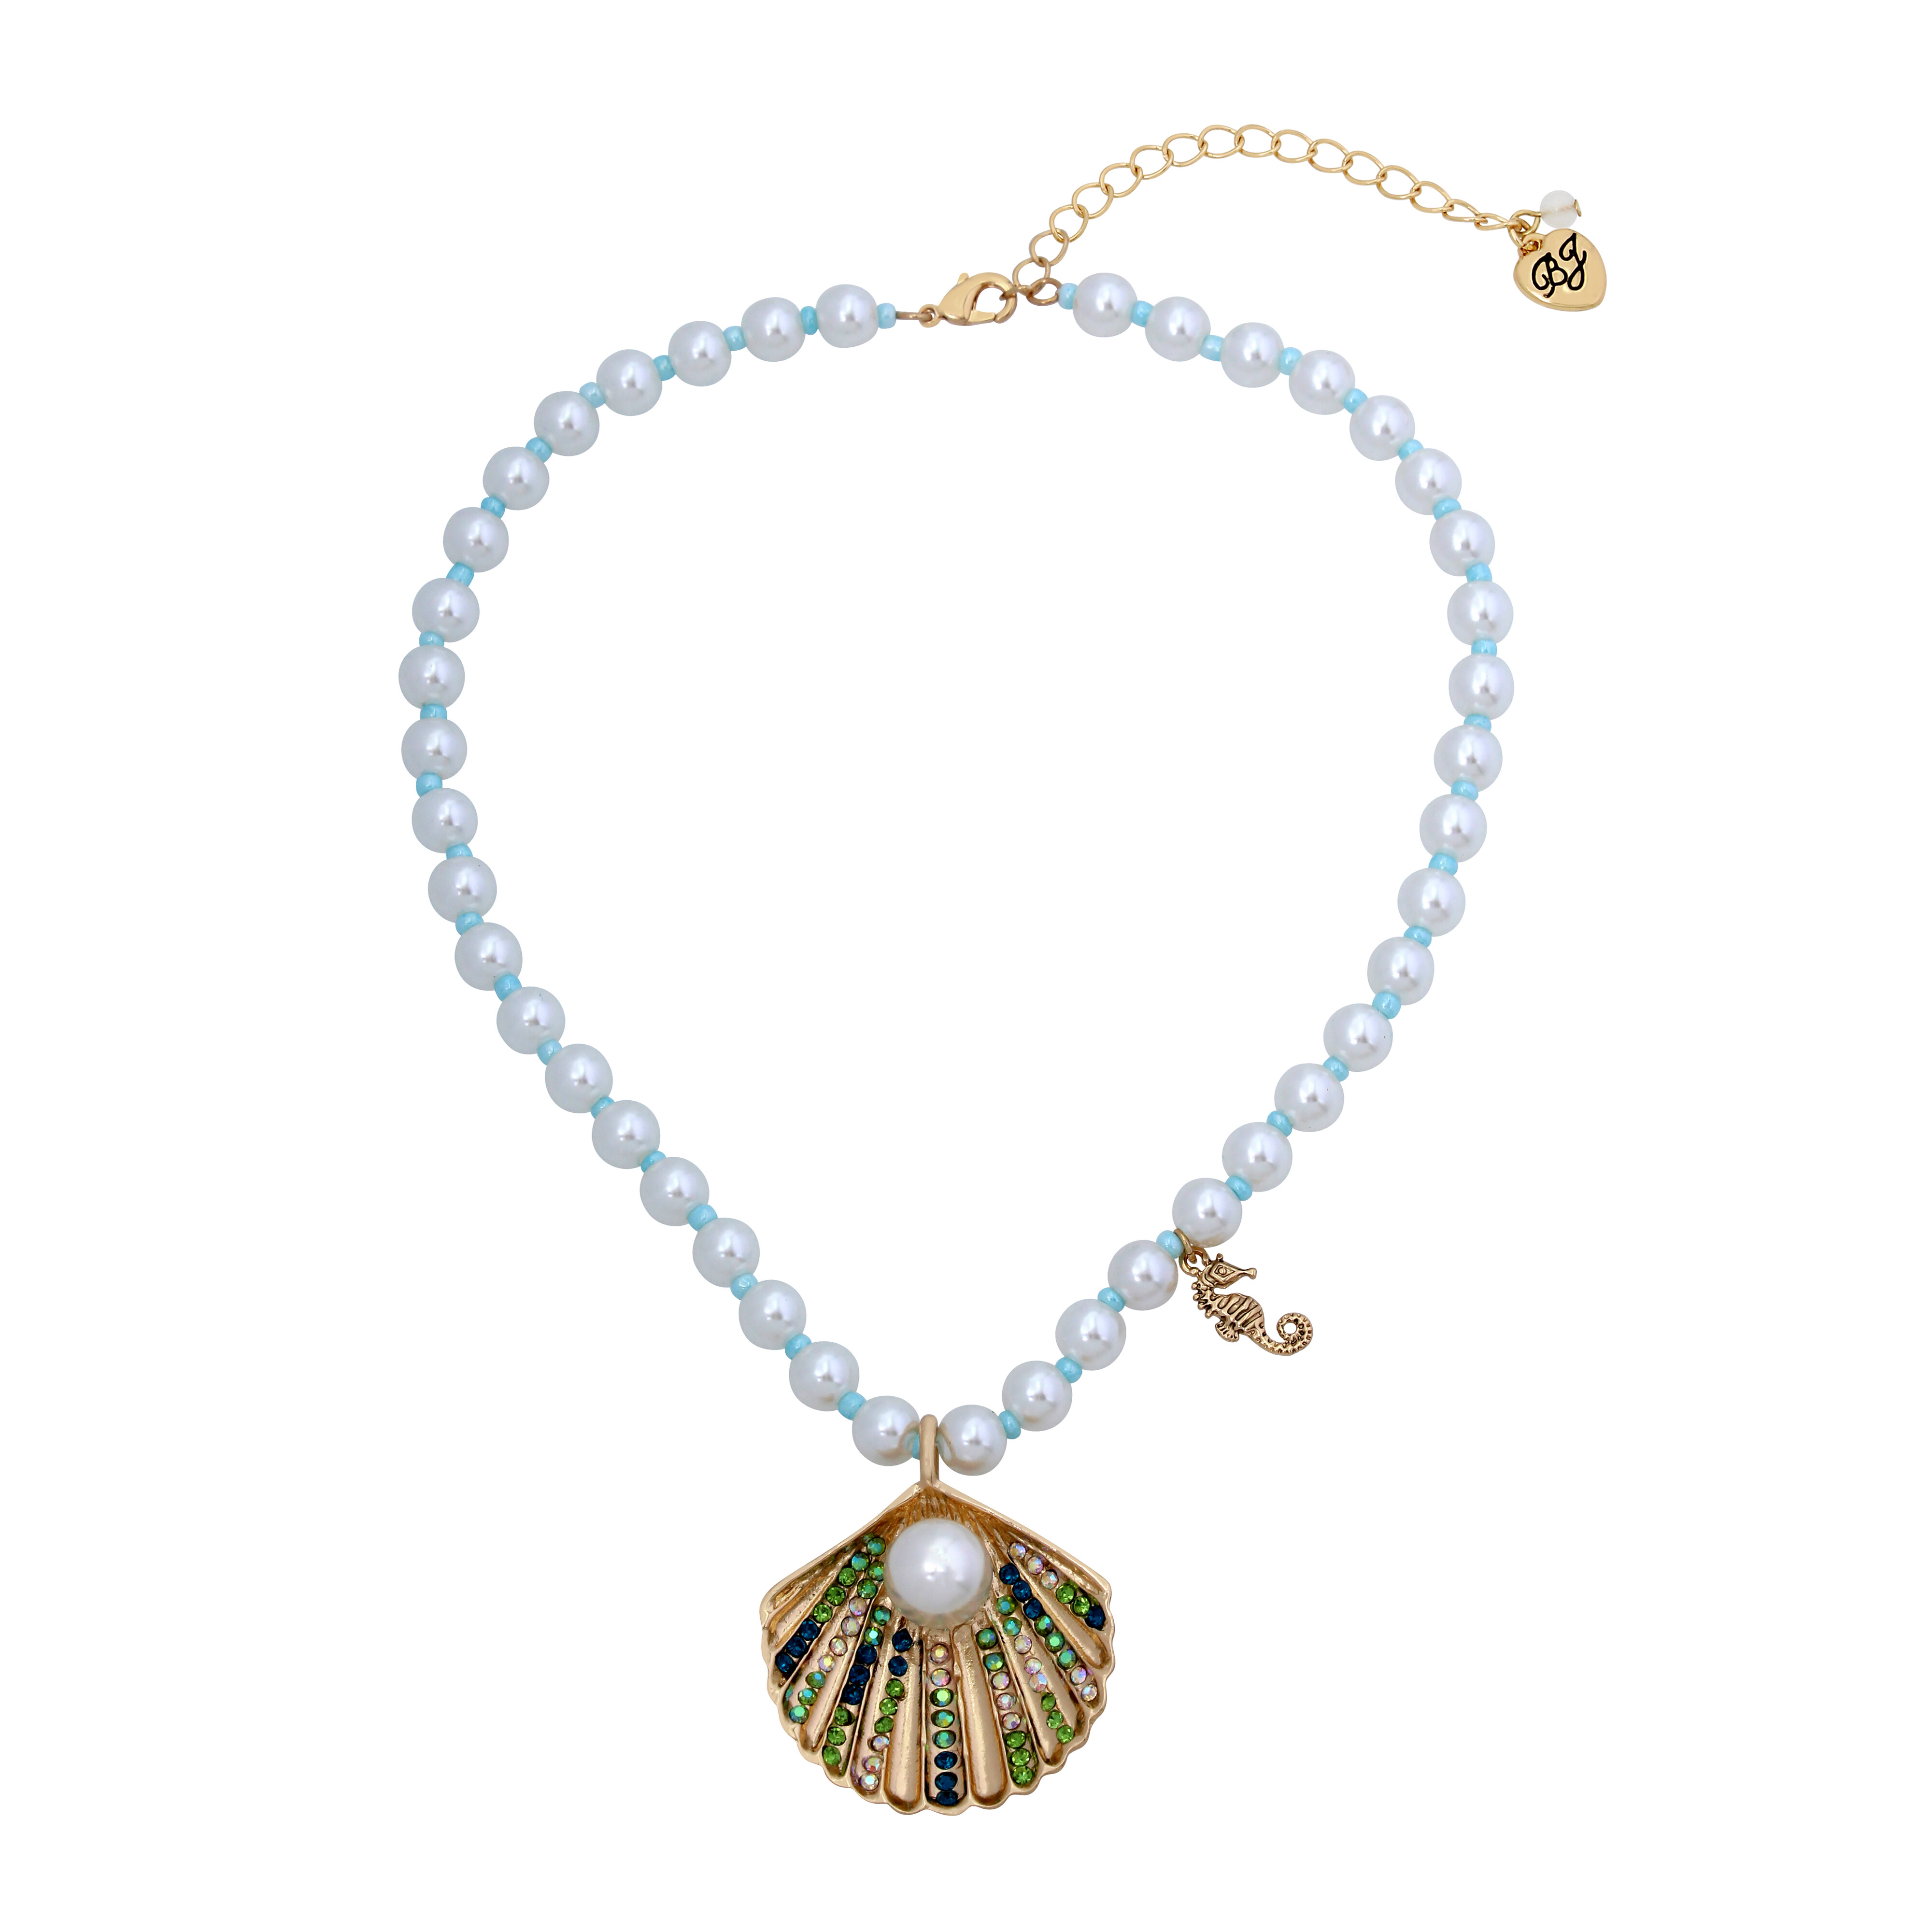 Bijuterii Femei Betsey Johnson Shell Pendant Pearl Necklace Blue